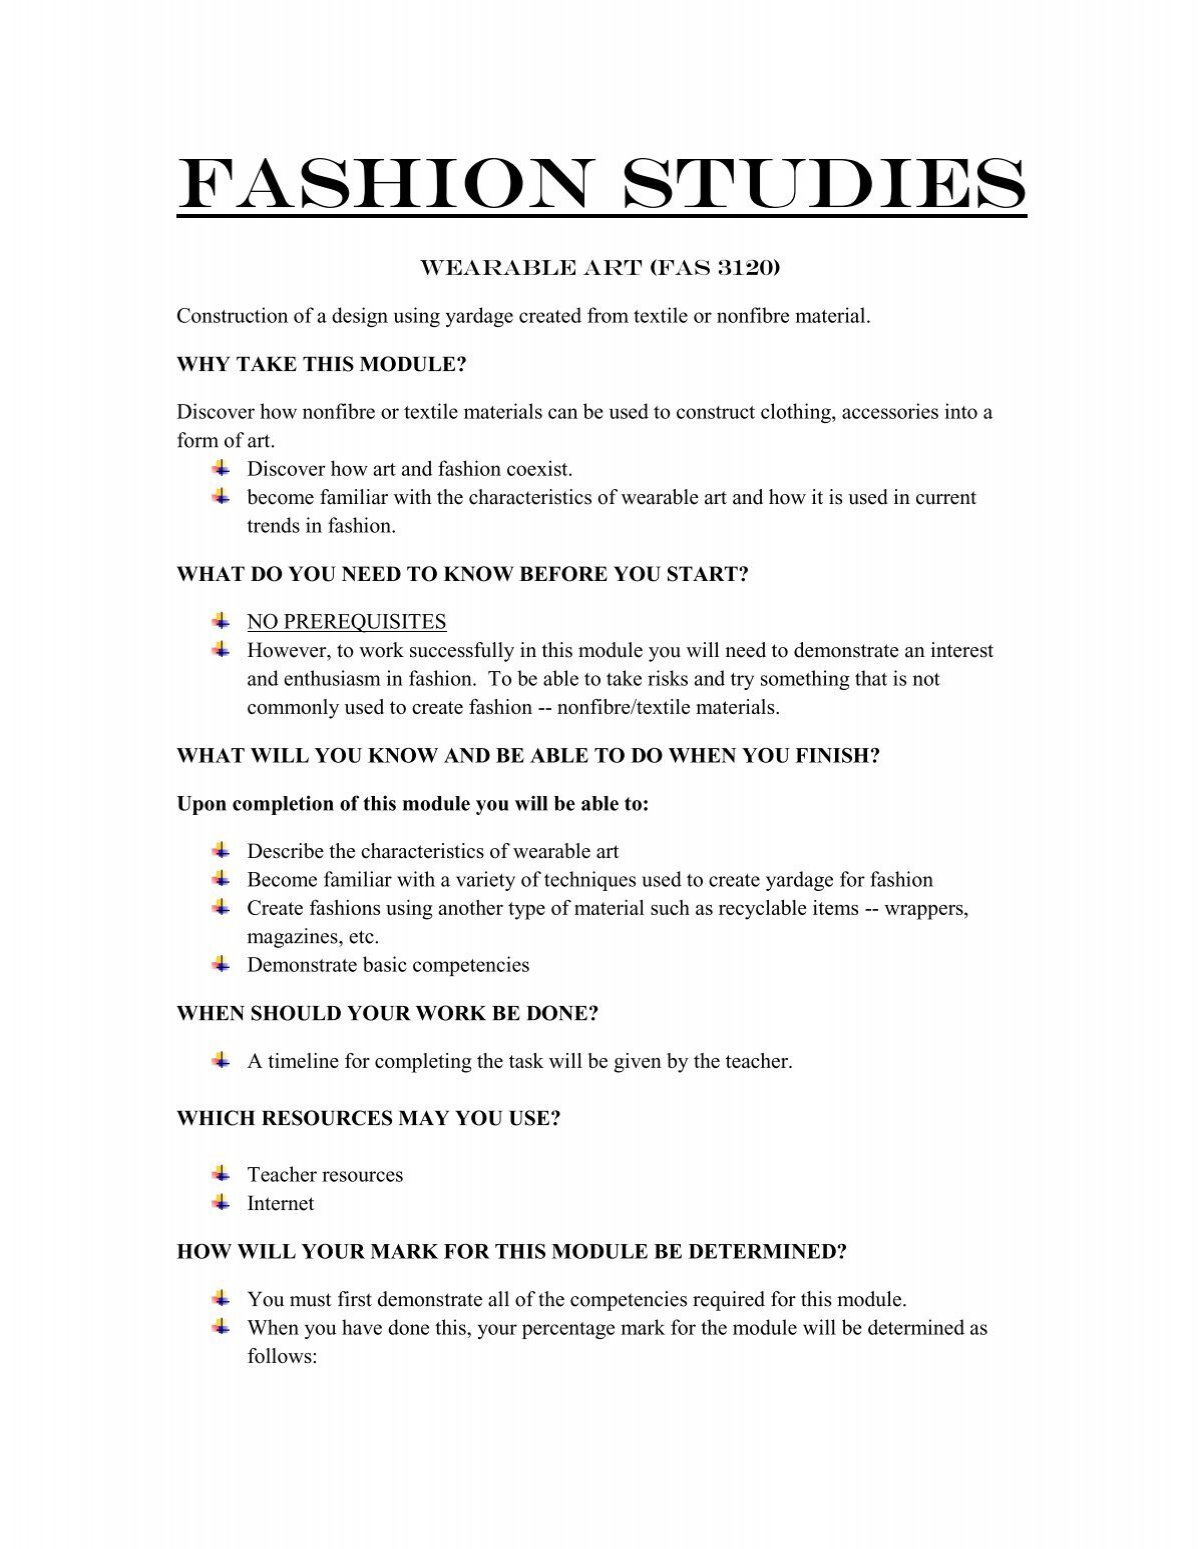 essay outline on fashion